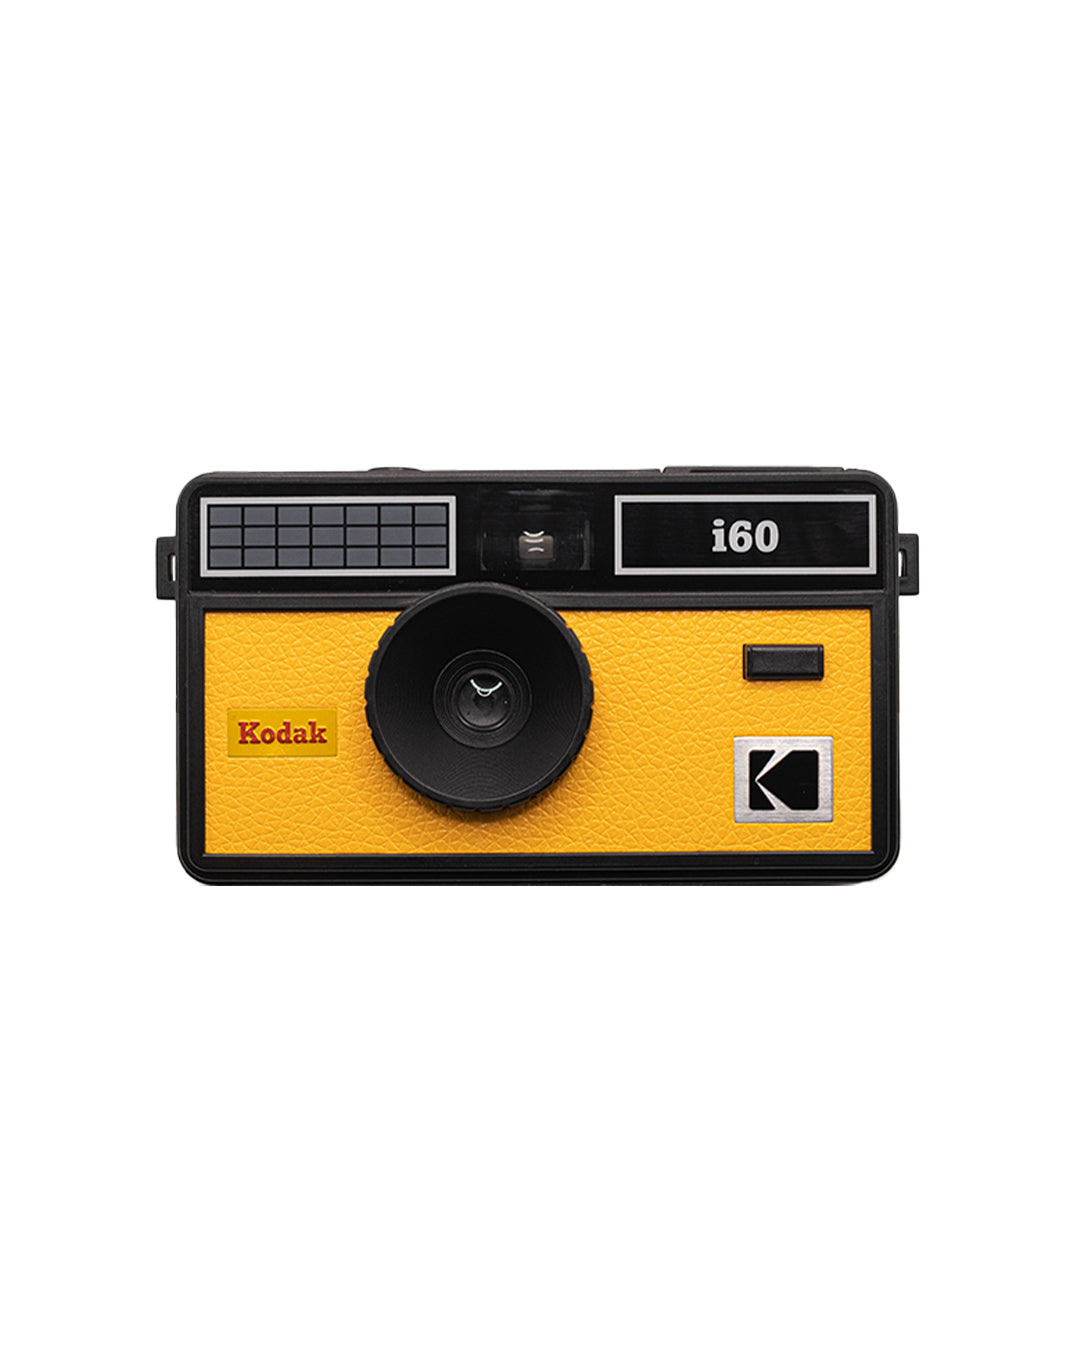 KODAK Film Camera i60 - Limited Stock!